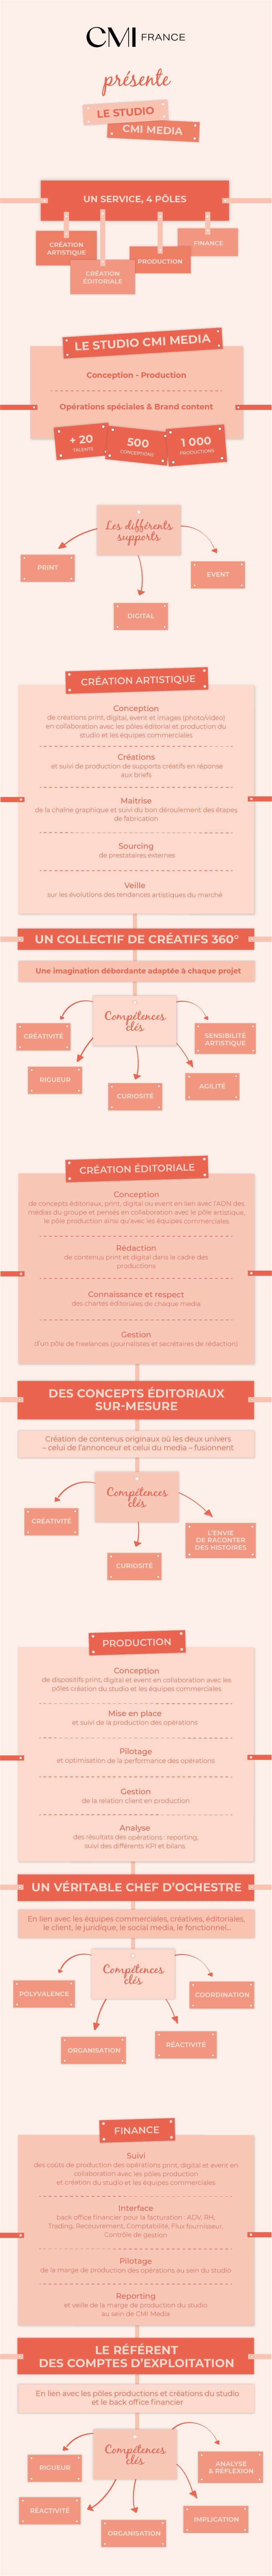 Infographie Métiers - Studio CMI Media - Opérations spéciales